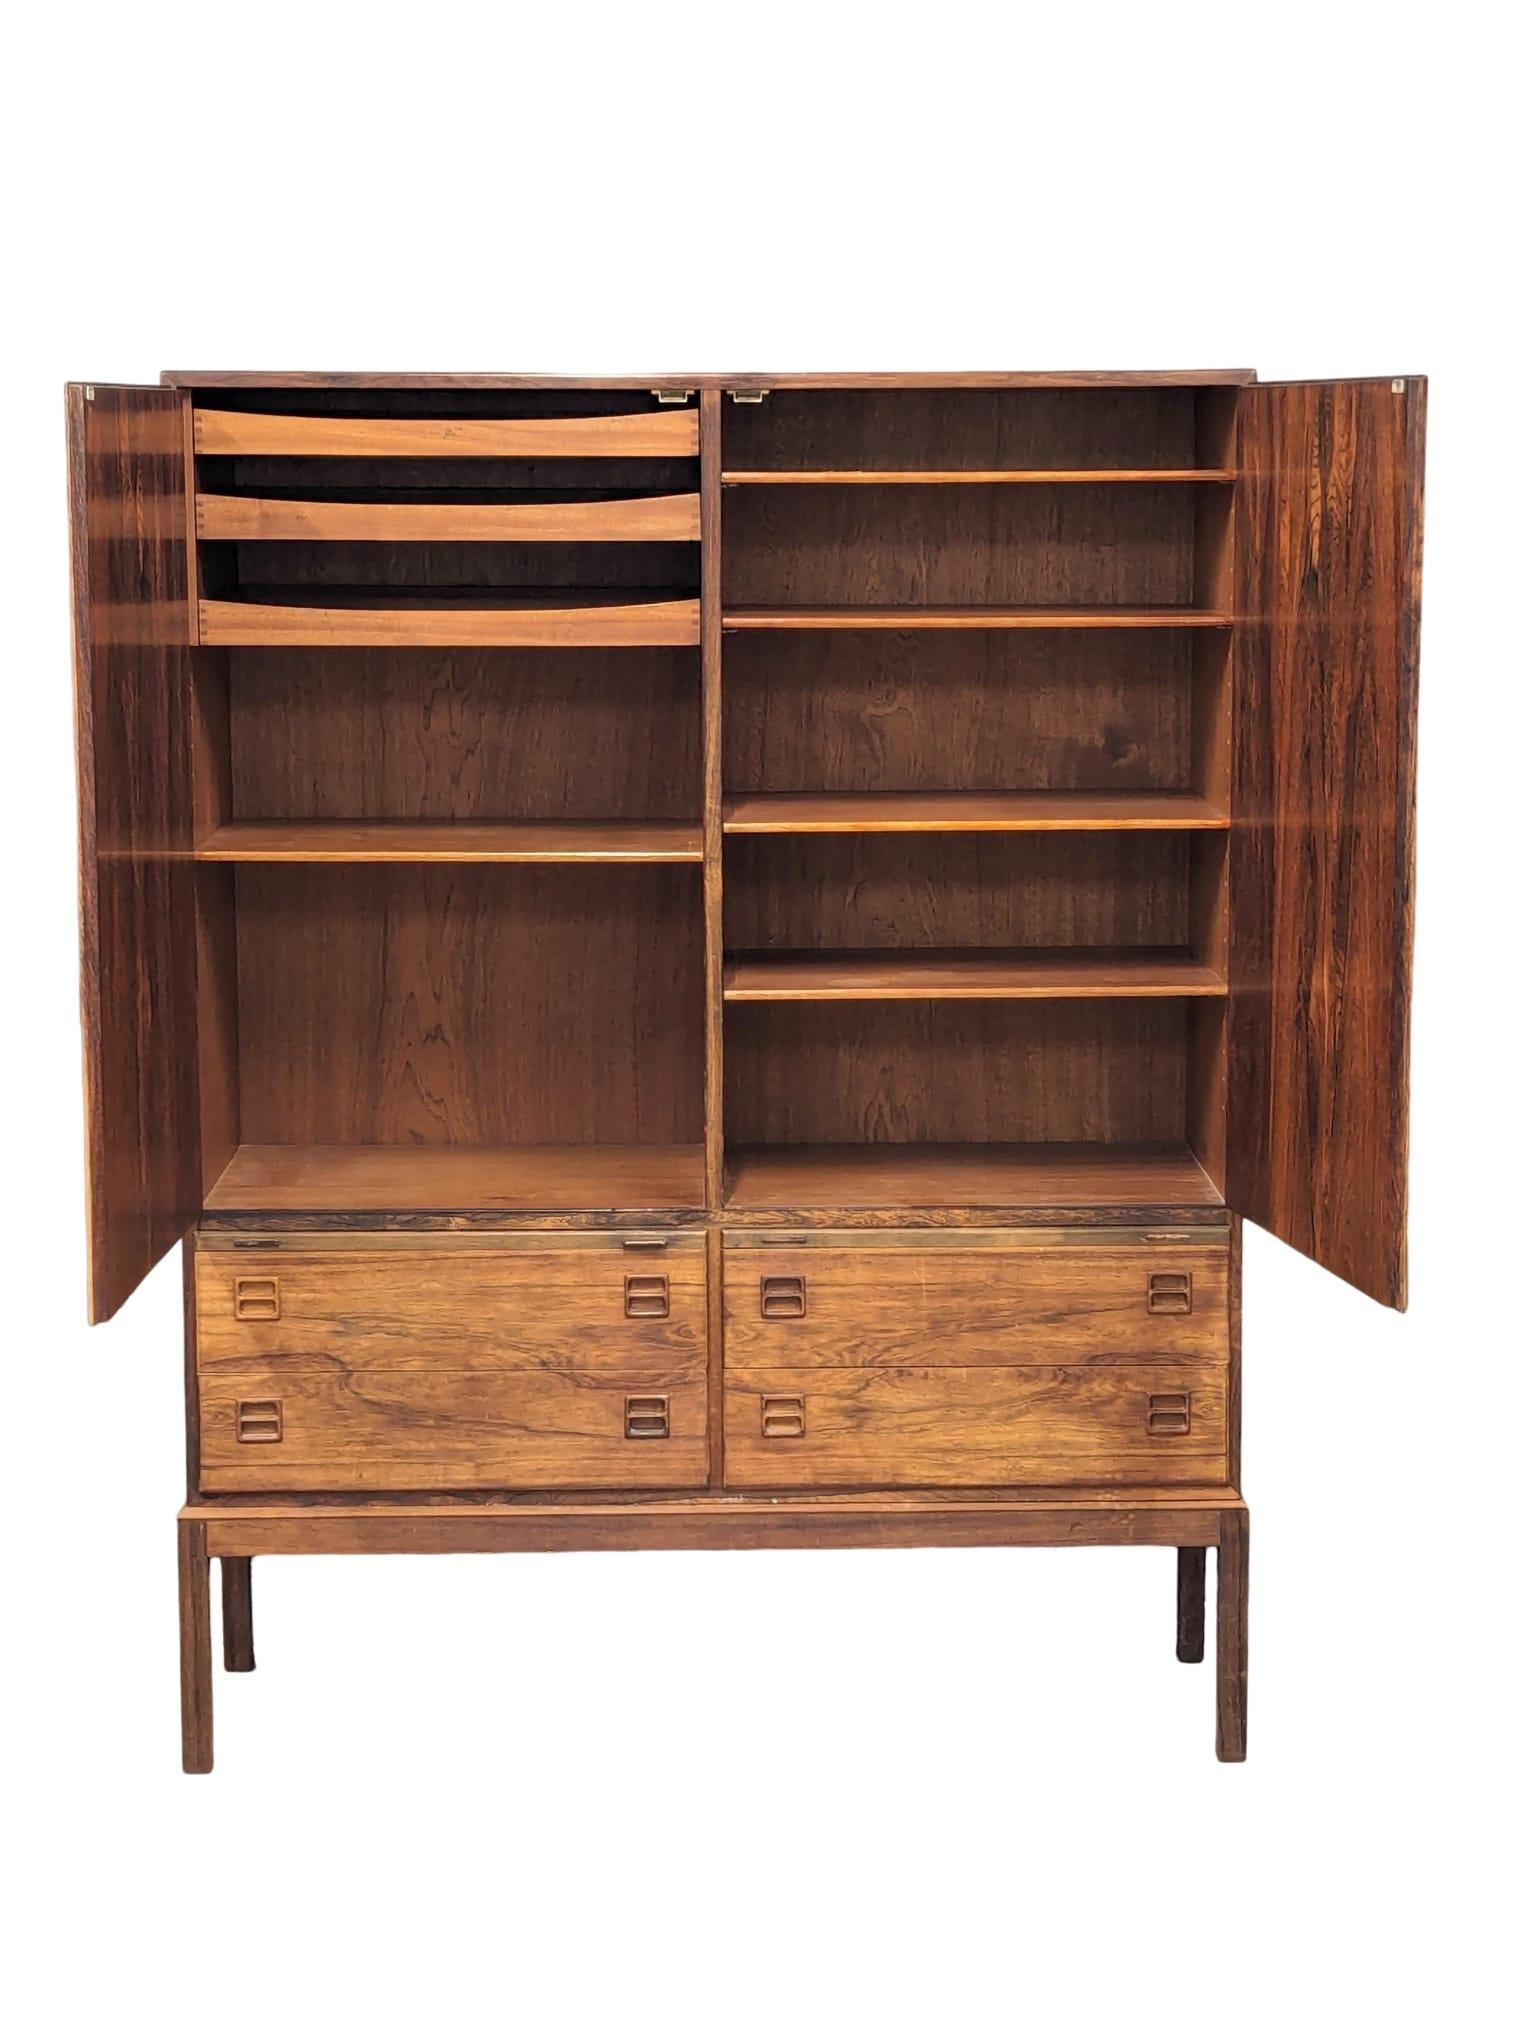 A Danish Mid Century rosewood cabinet designed by Johannes Andersen for Bernhard Pedersen & Son, - Image 9 of 11